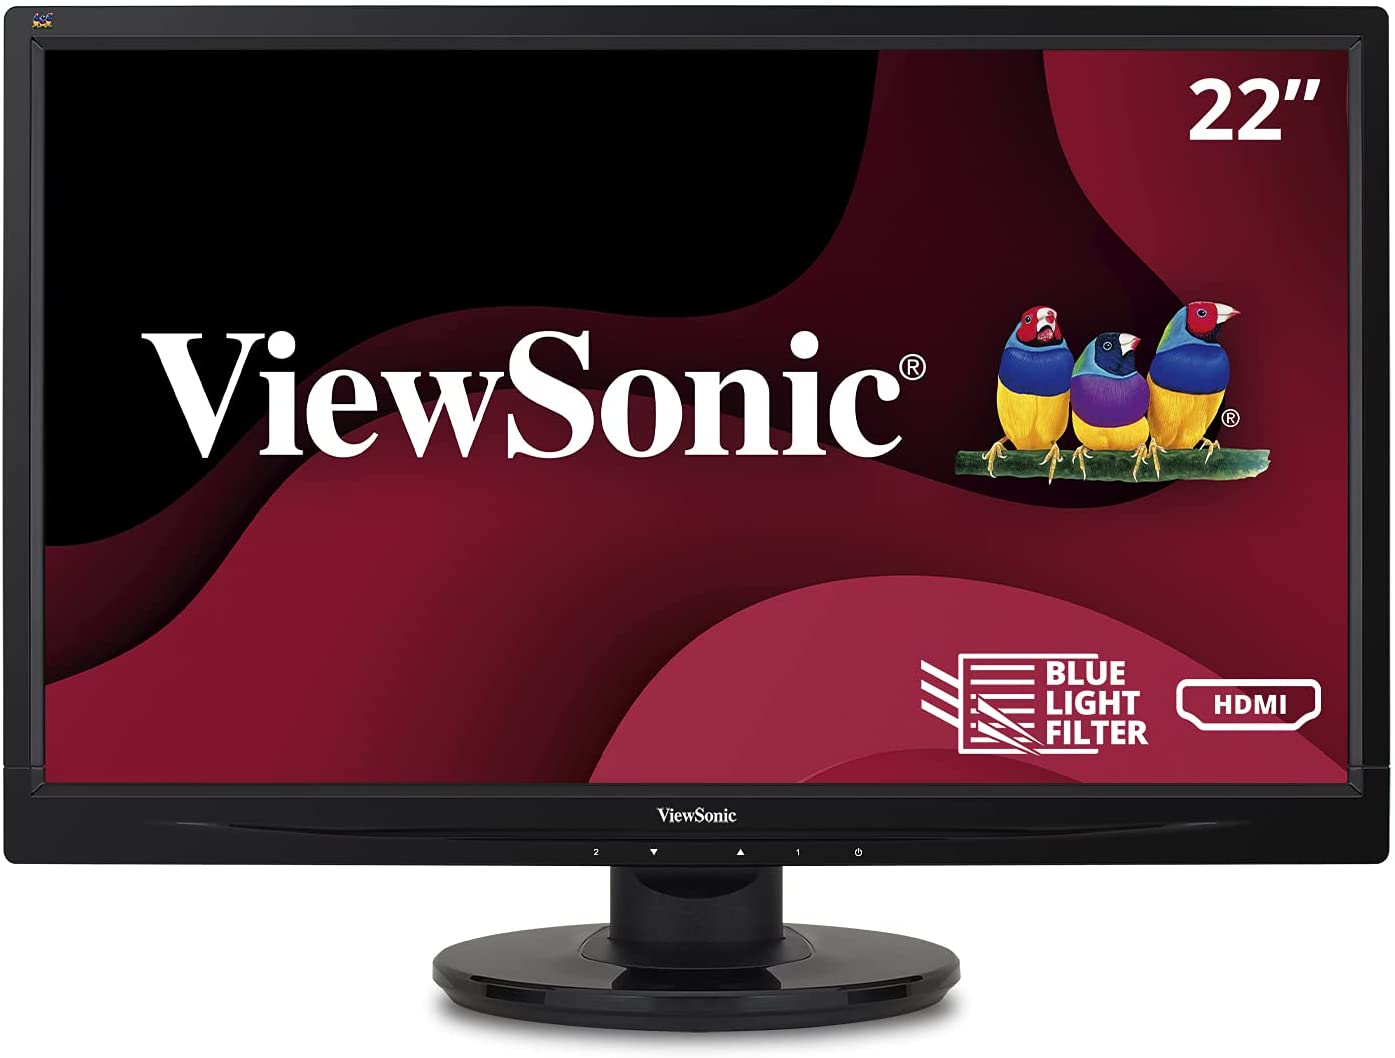  1. ViewSonic 1080p HD Monitors Under $100 